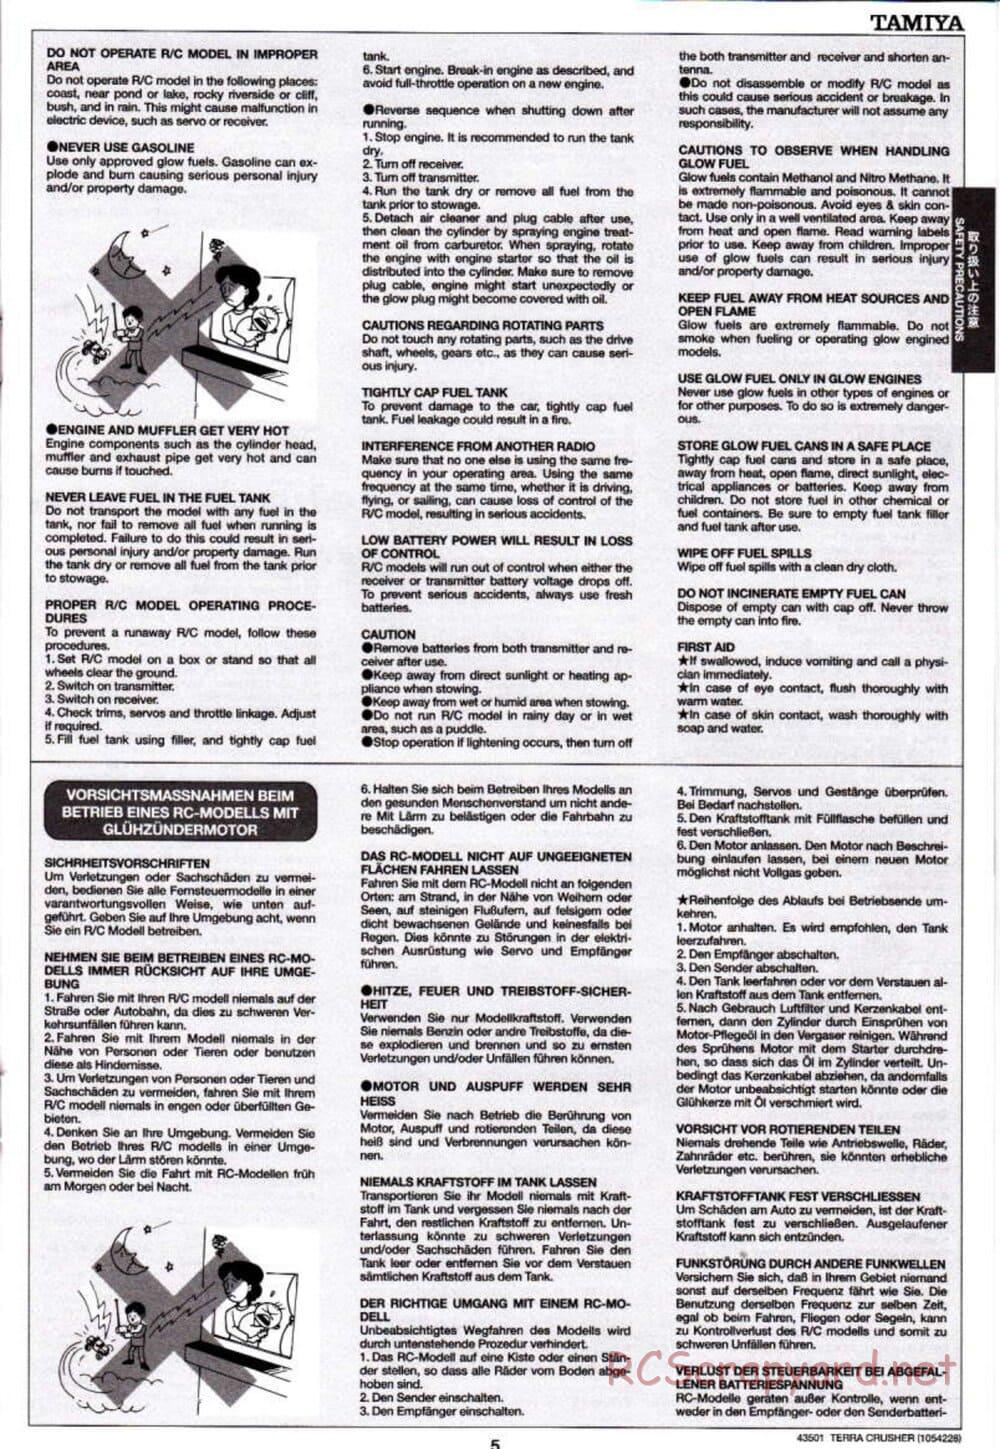 Tamiya - Terra Crusher - TGM-02 Chassis - Manual - Page 5